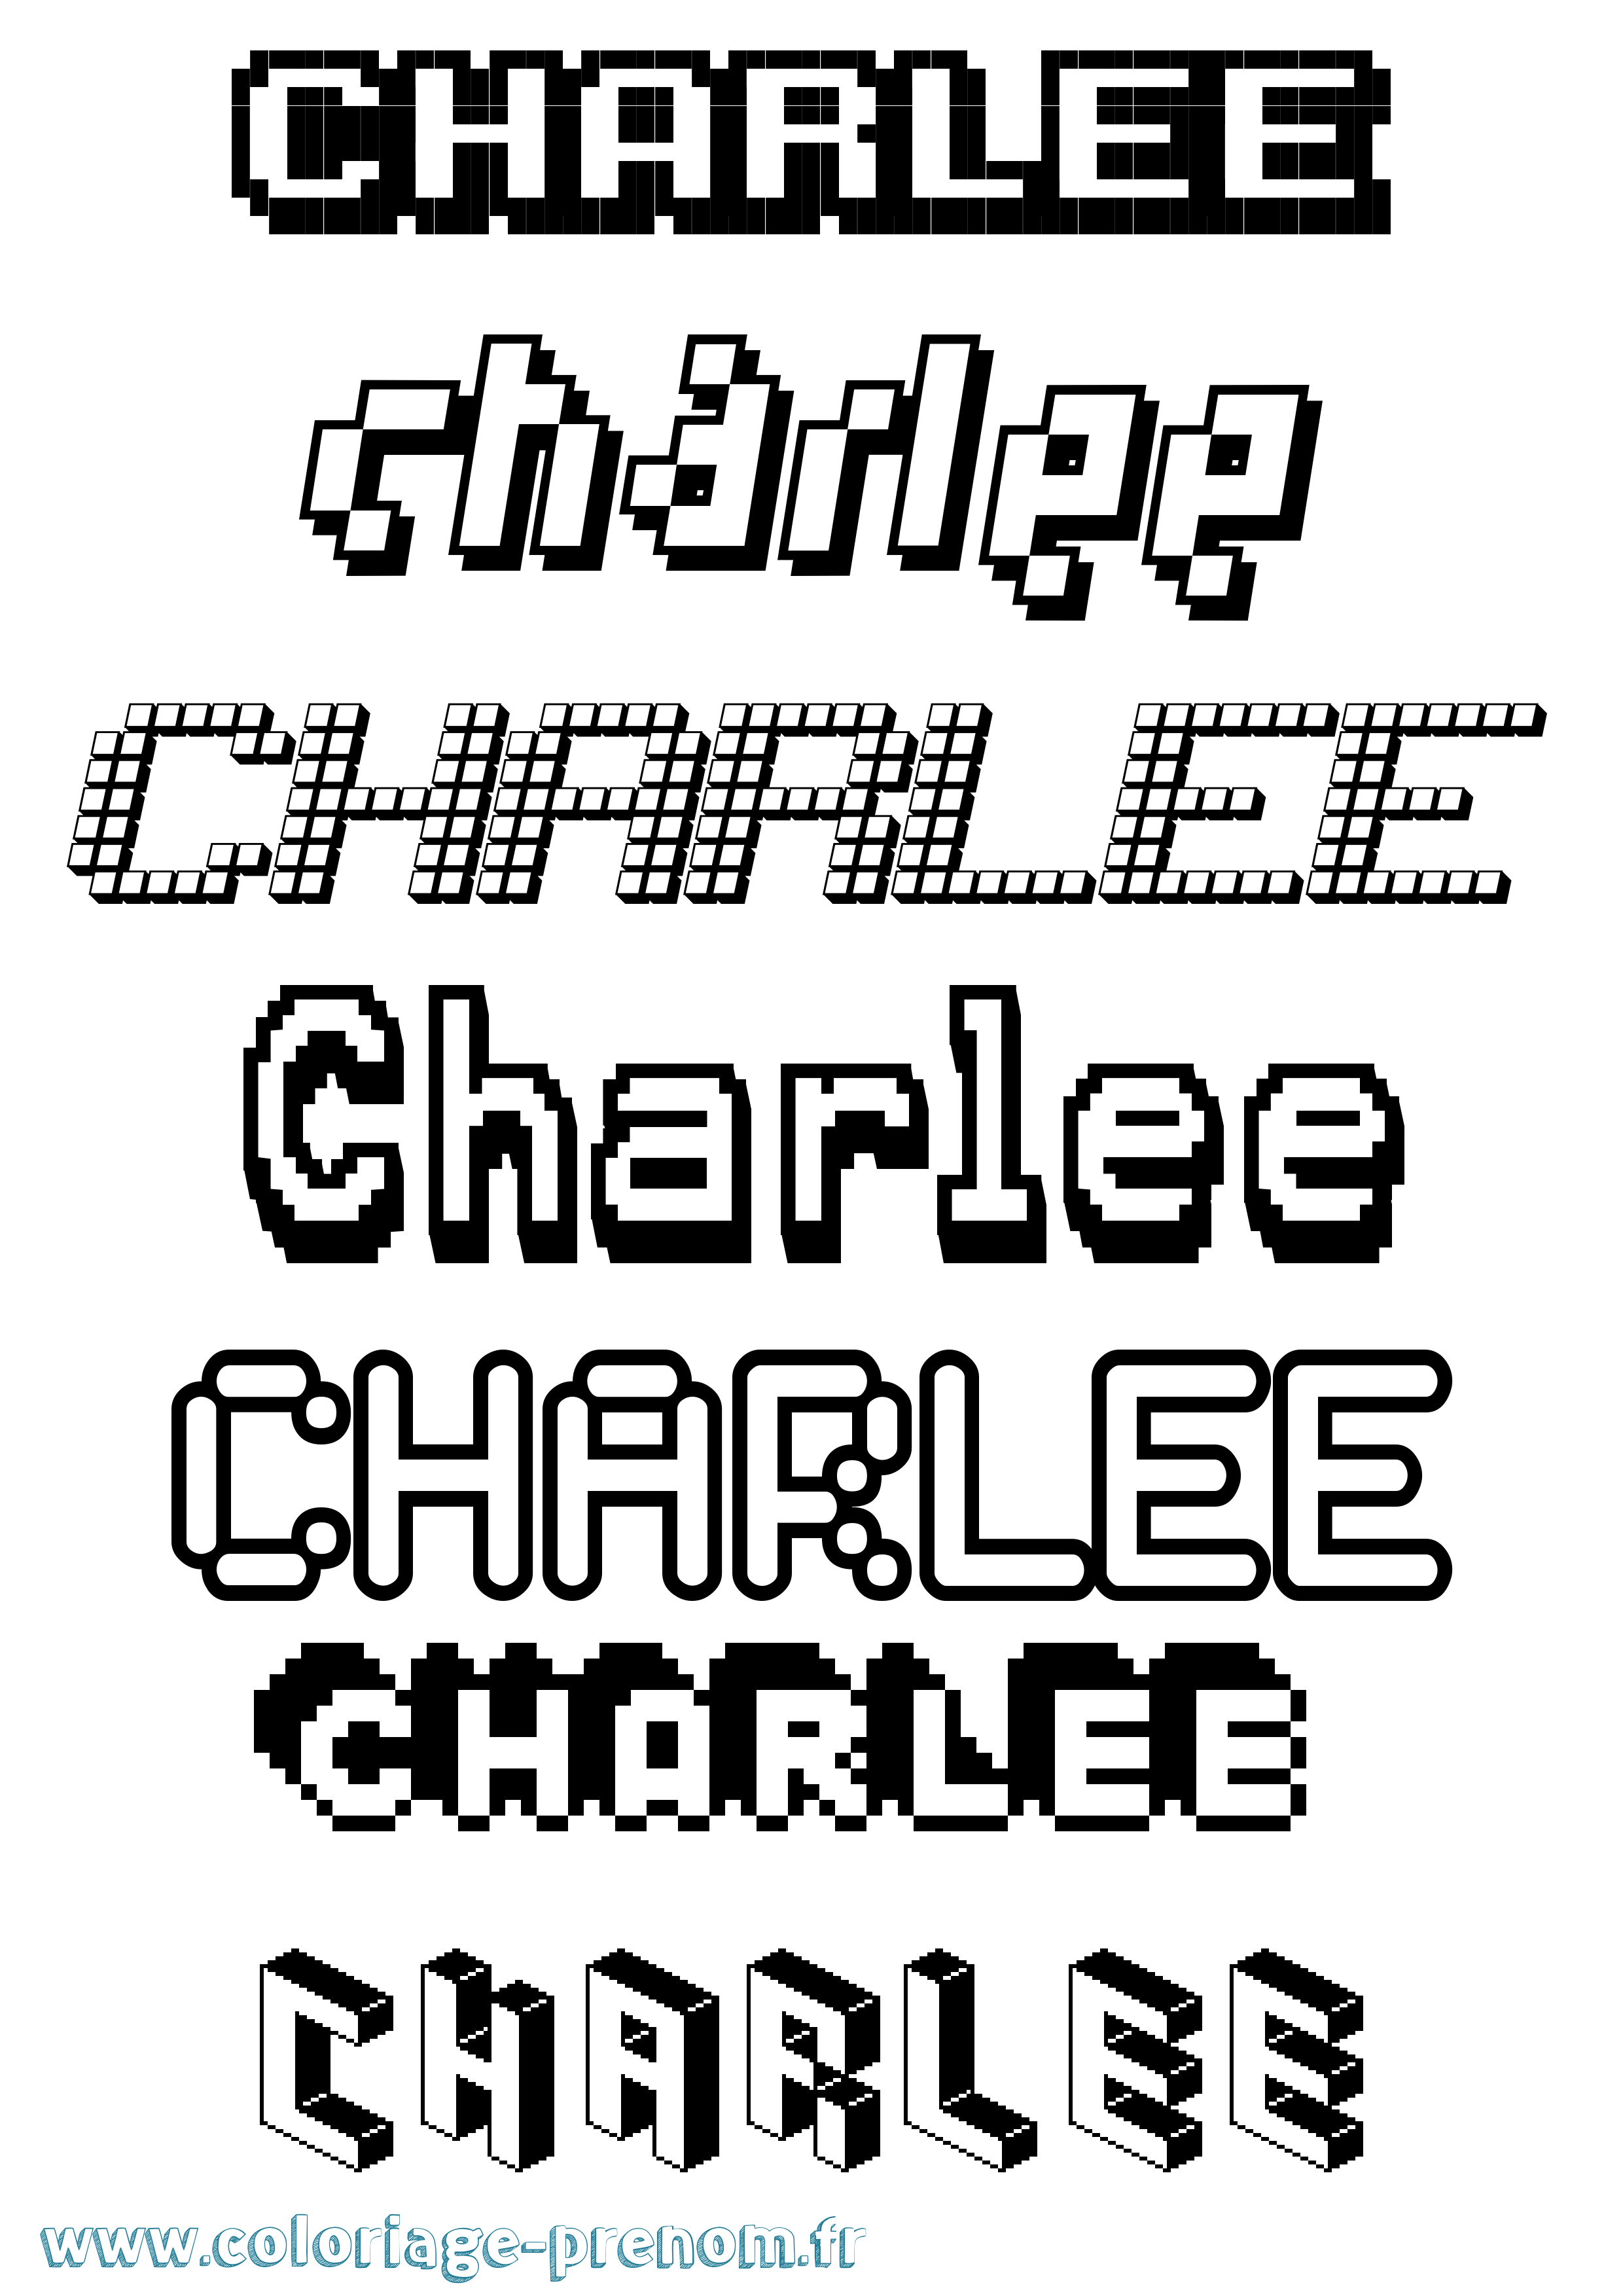 Coloriage prénom Charlee Pixel